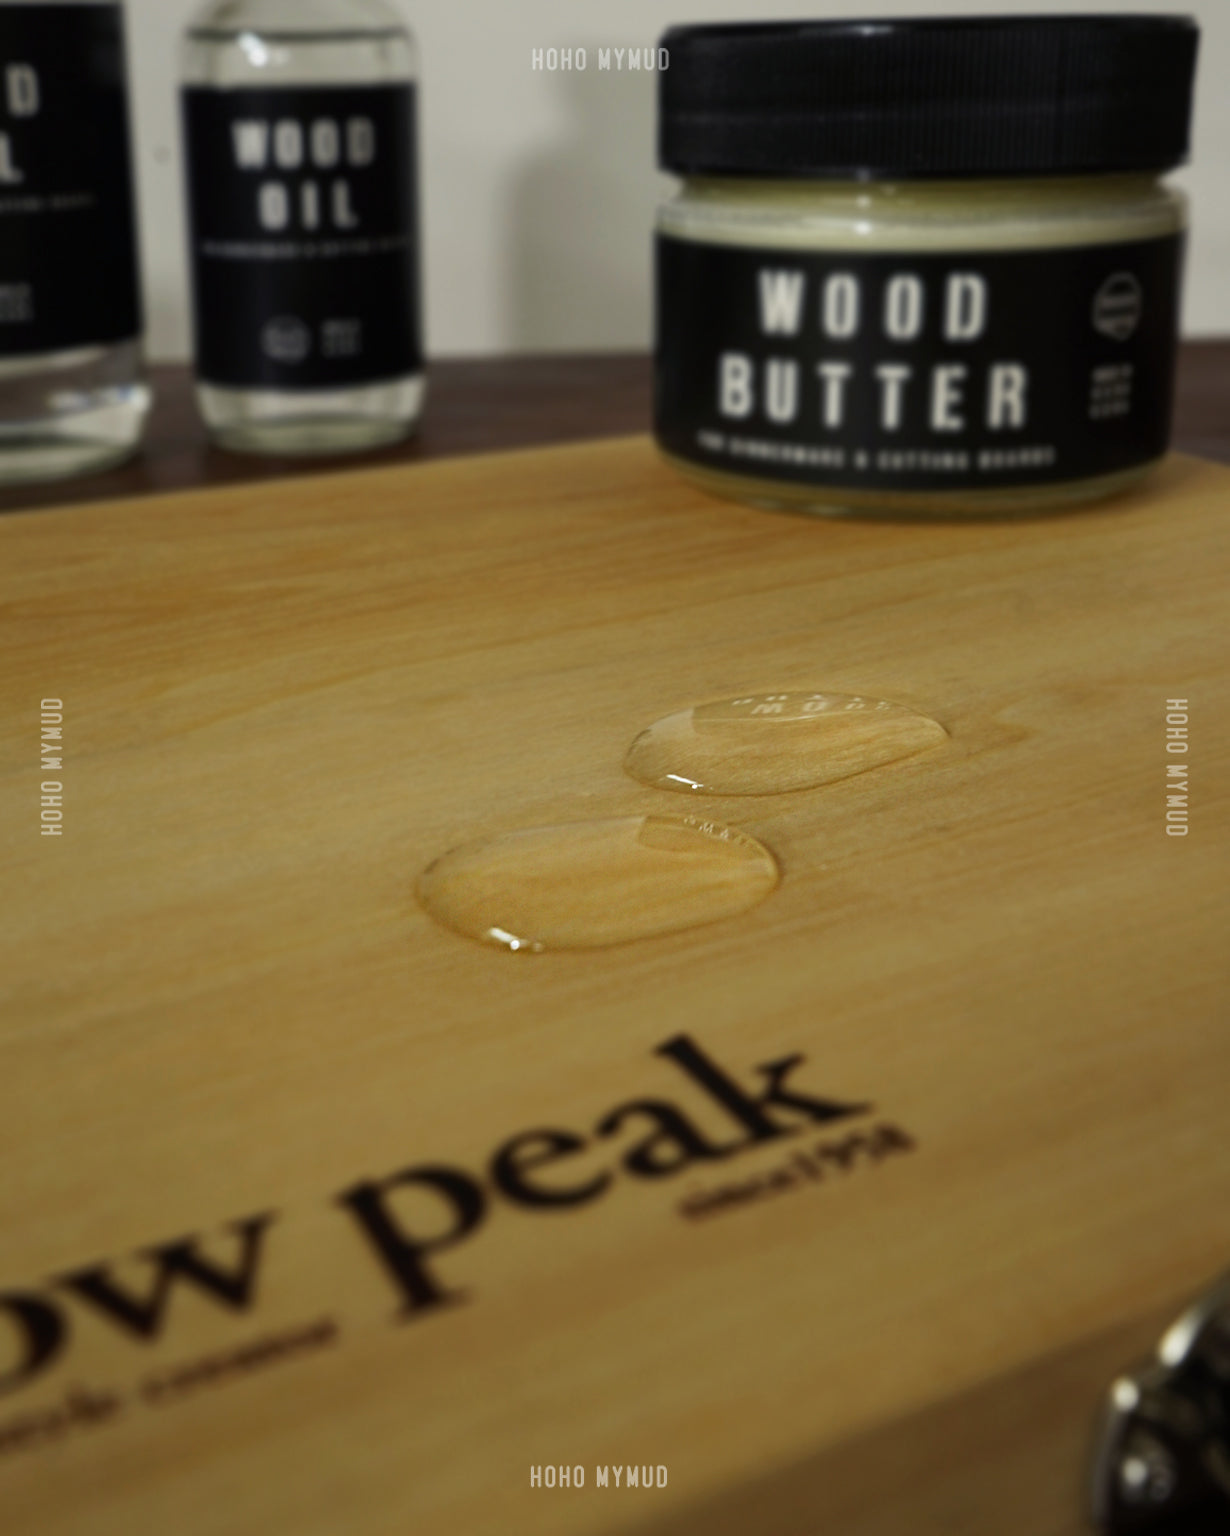 Rough Paper Wood Butter for Dinnerware & Cutting Boards 木製食器砧板用 | 天然護木蠟